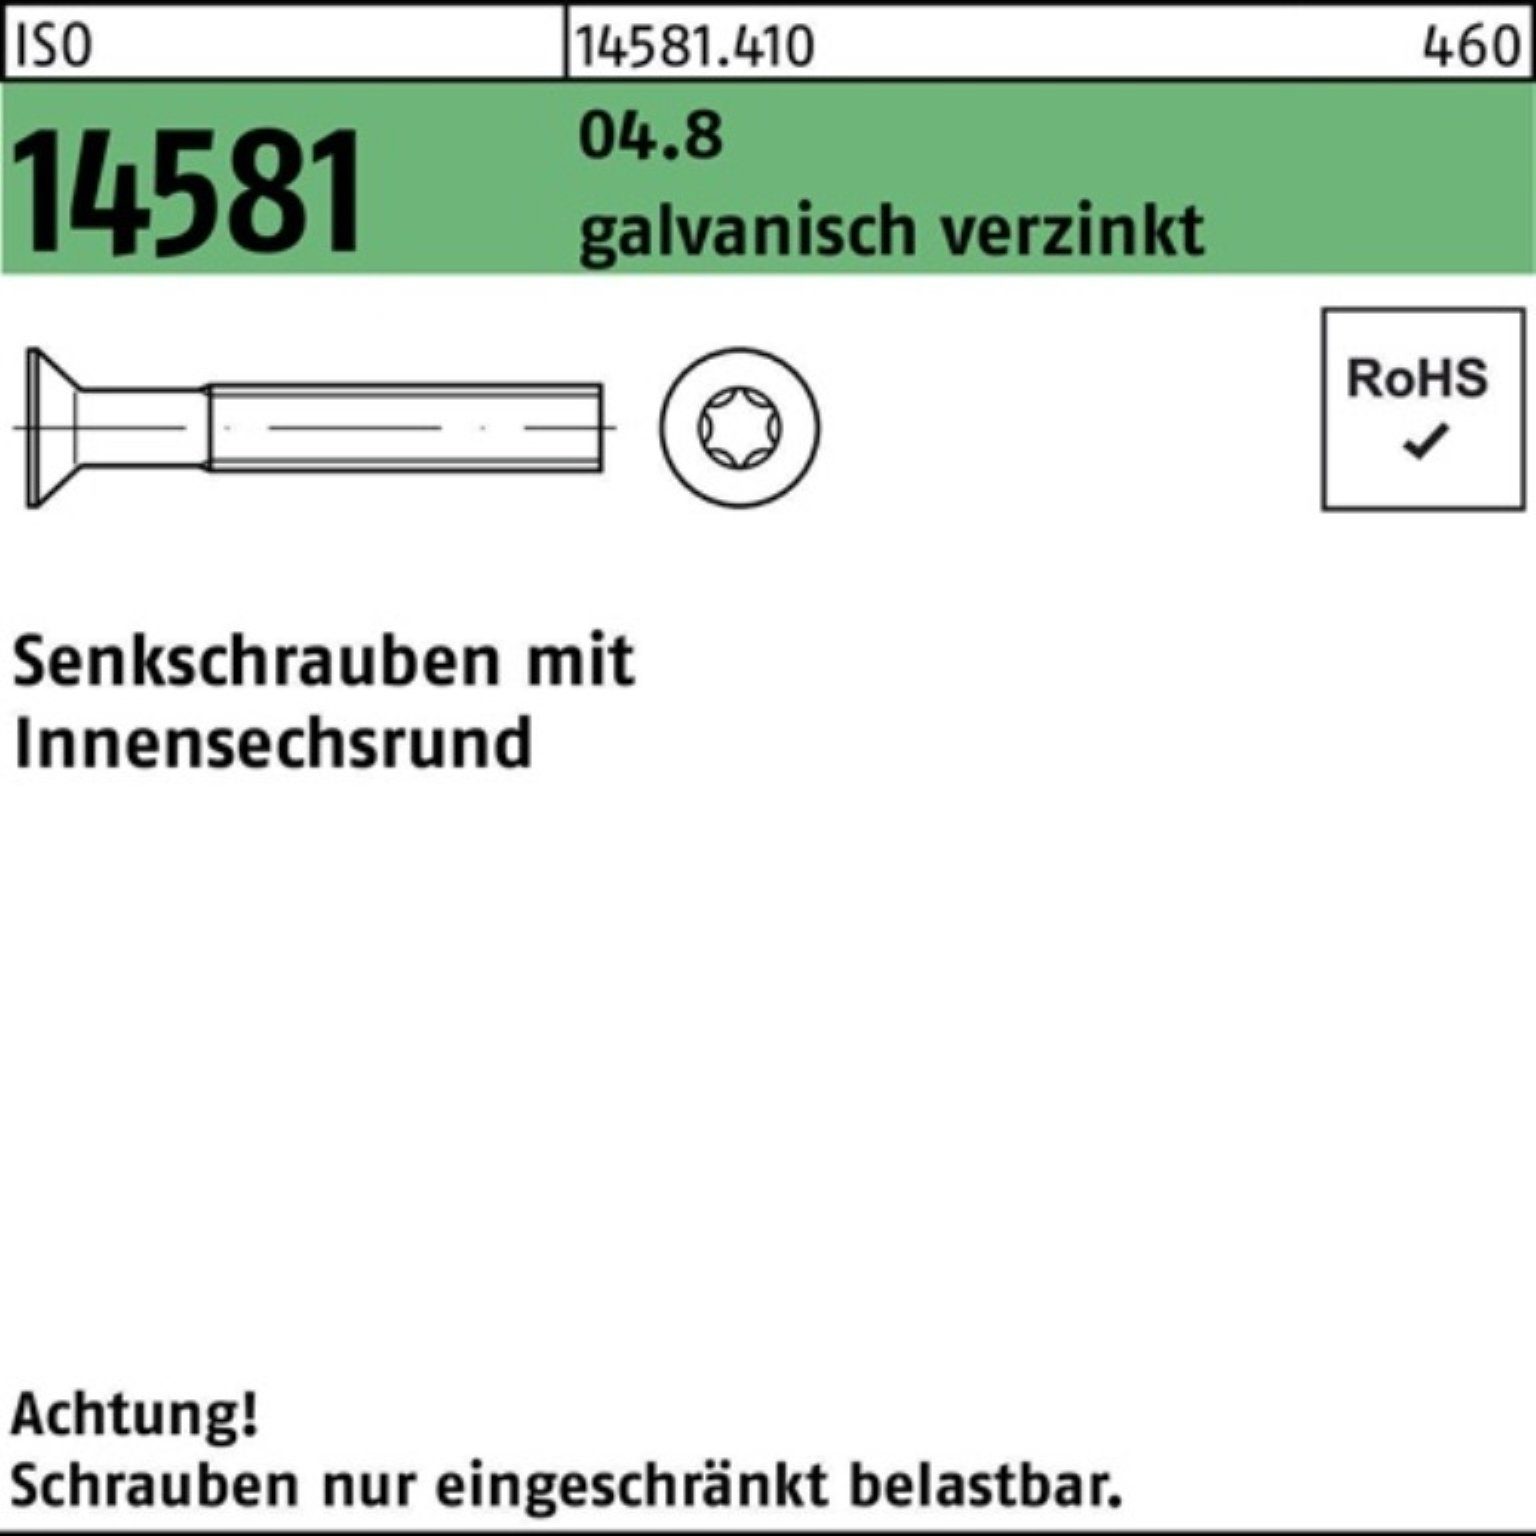 glänzend Reyher Senkschraube 500er 14581 04.8 Pack T25 500St. ISO Senkschraube galv.verz. M5x45 ISR